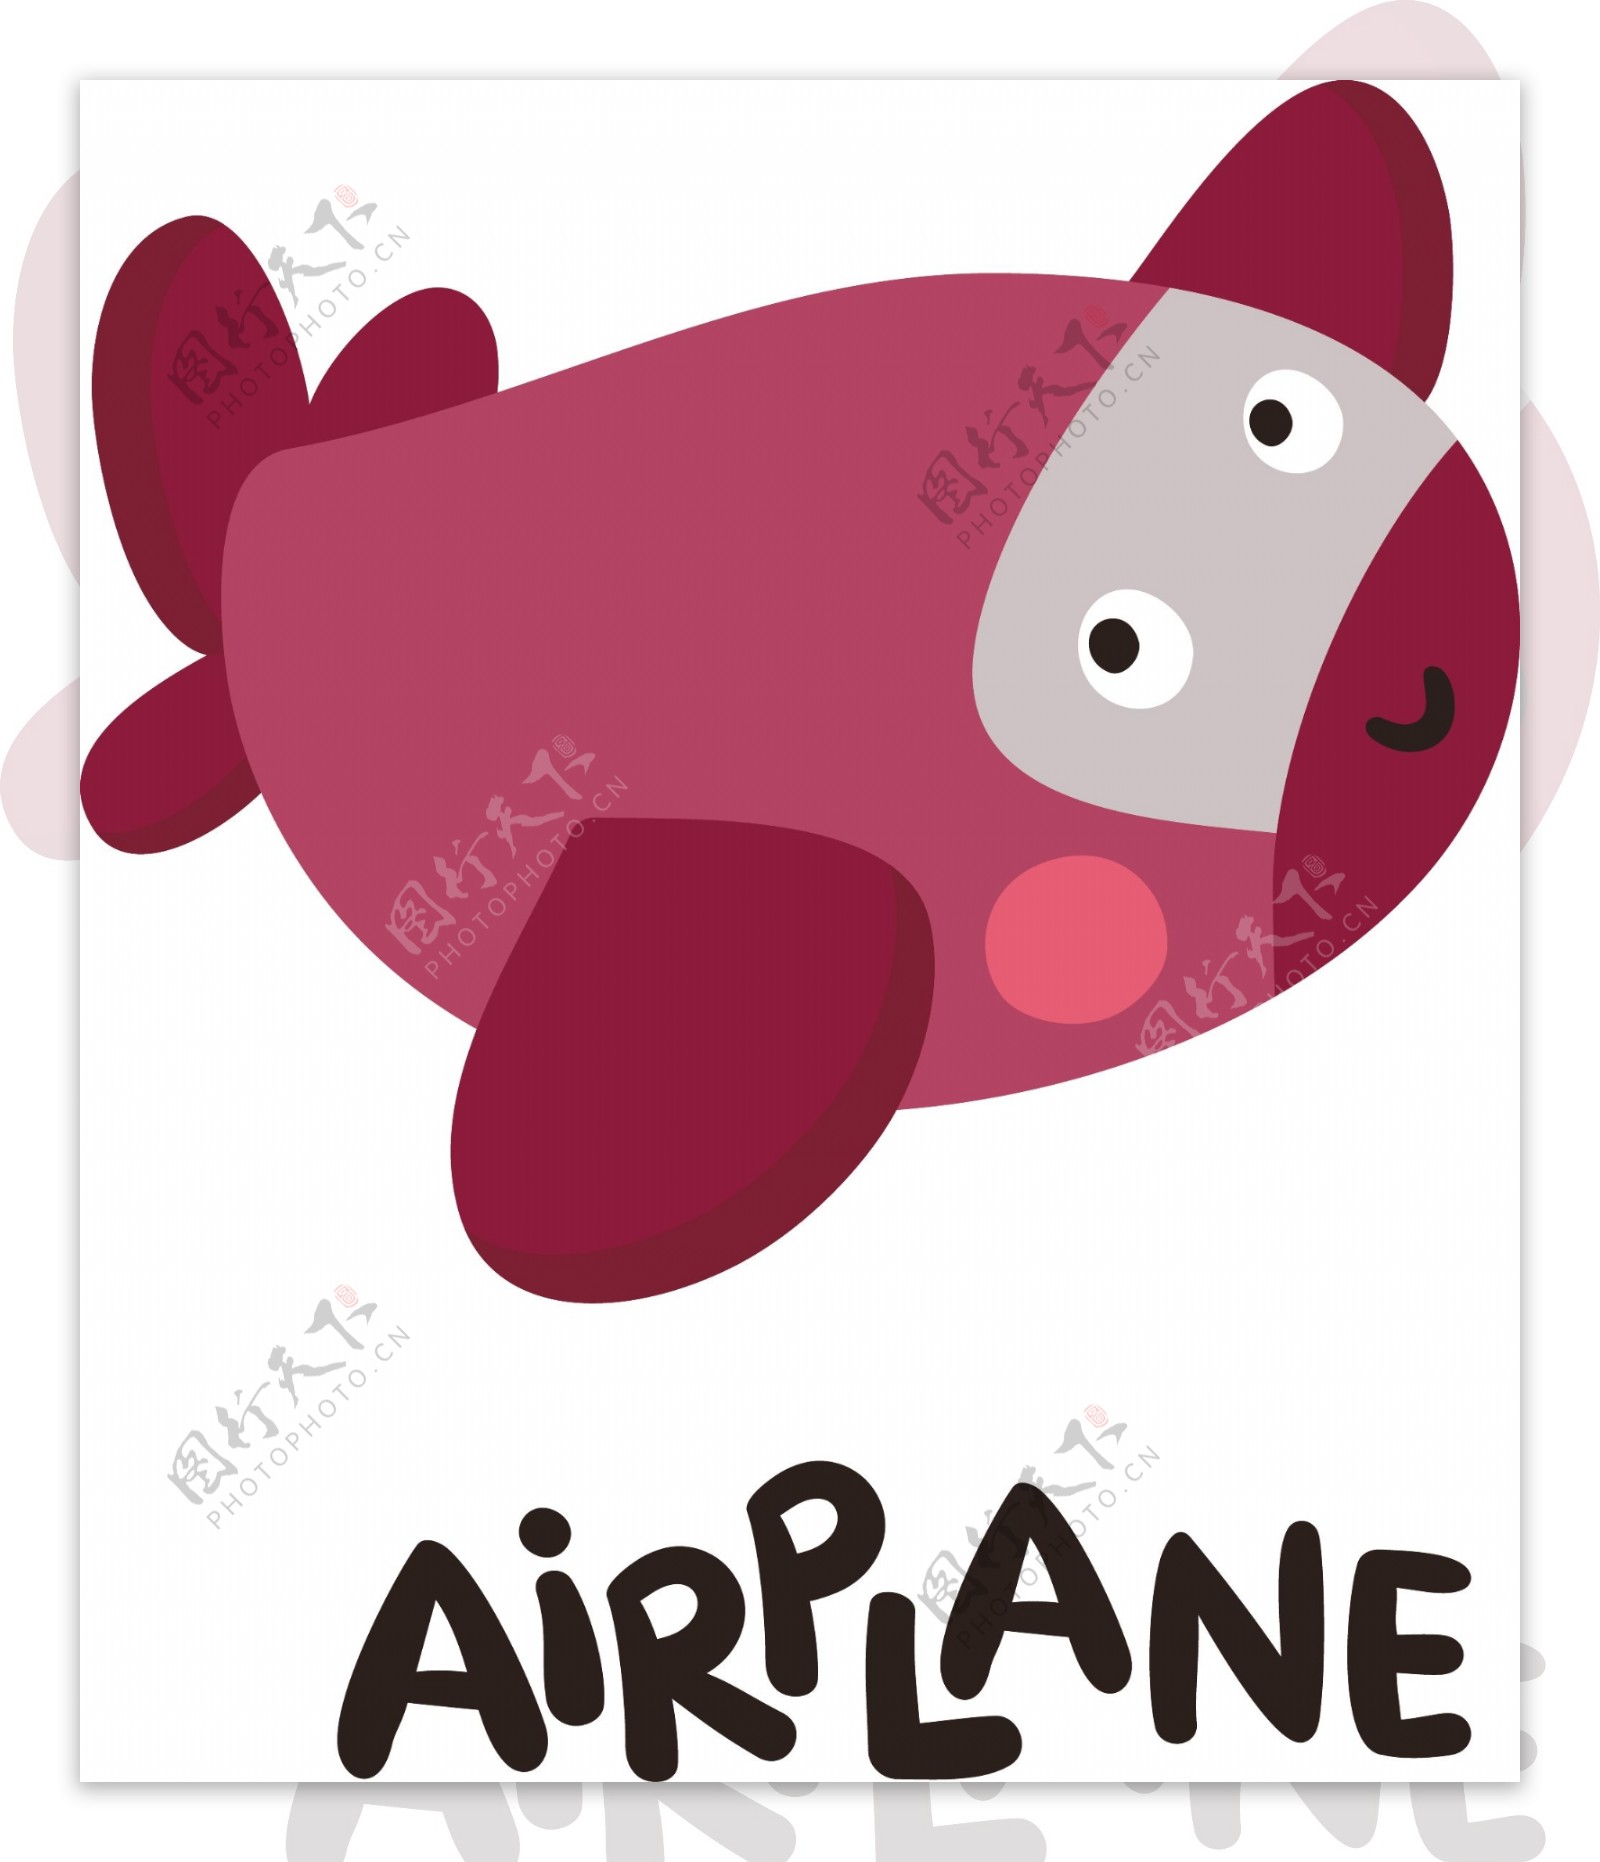 AIRPLANE可爱卡通动物人物矢量素材